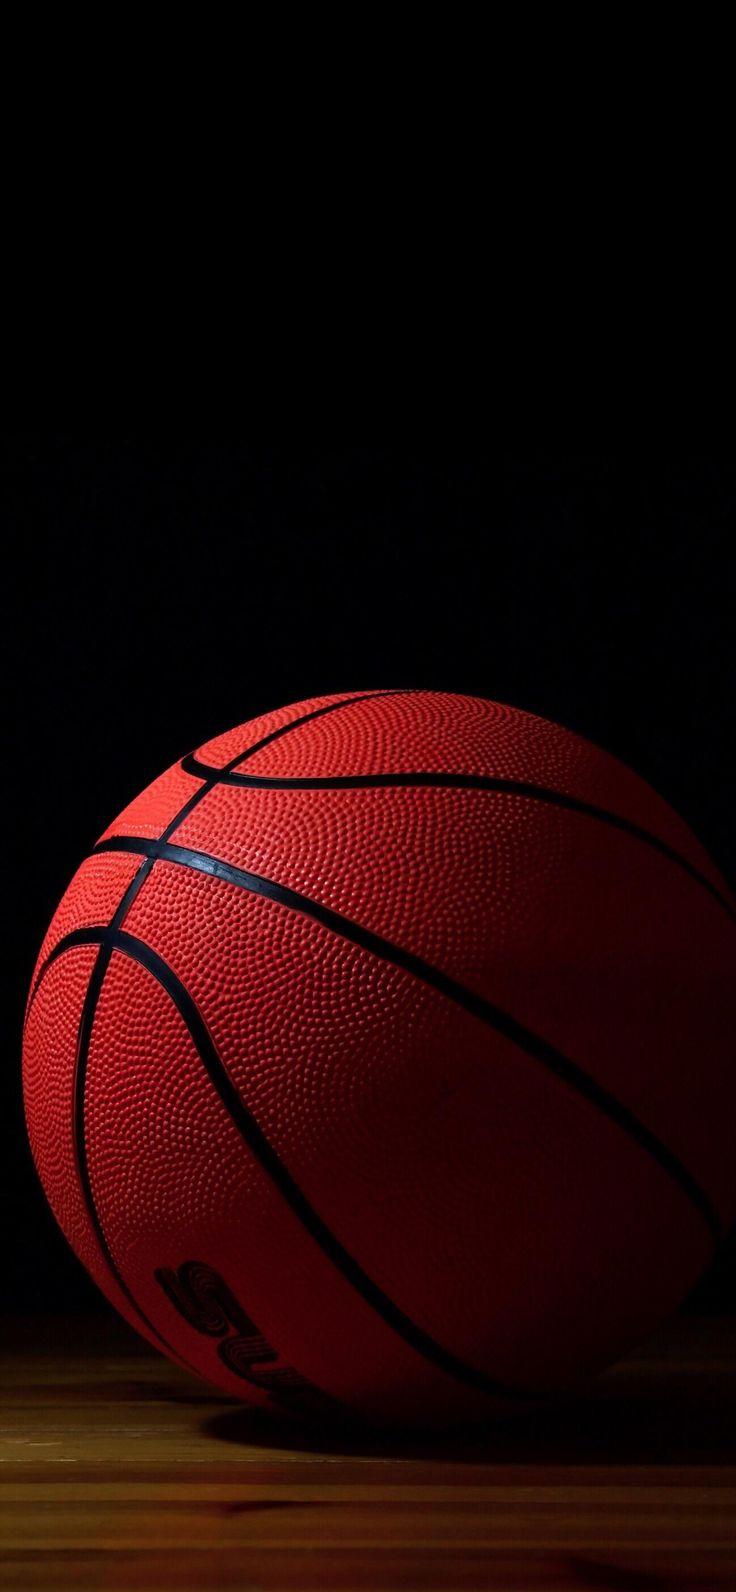 Basketball Wallpaper Explore More Ball Judge Match